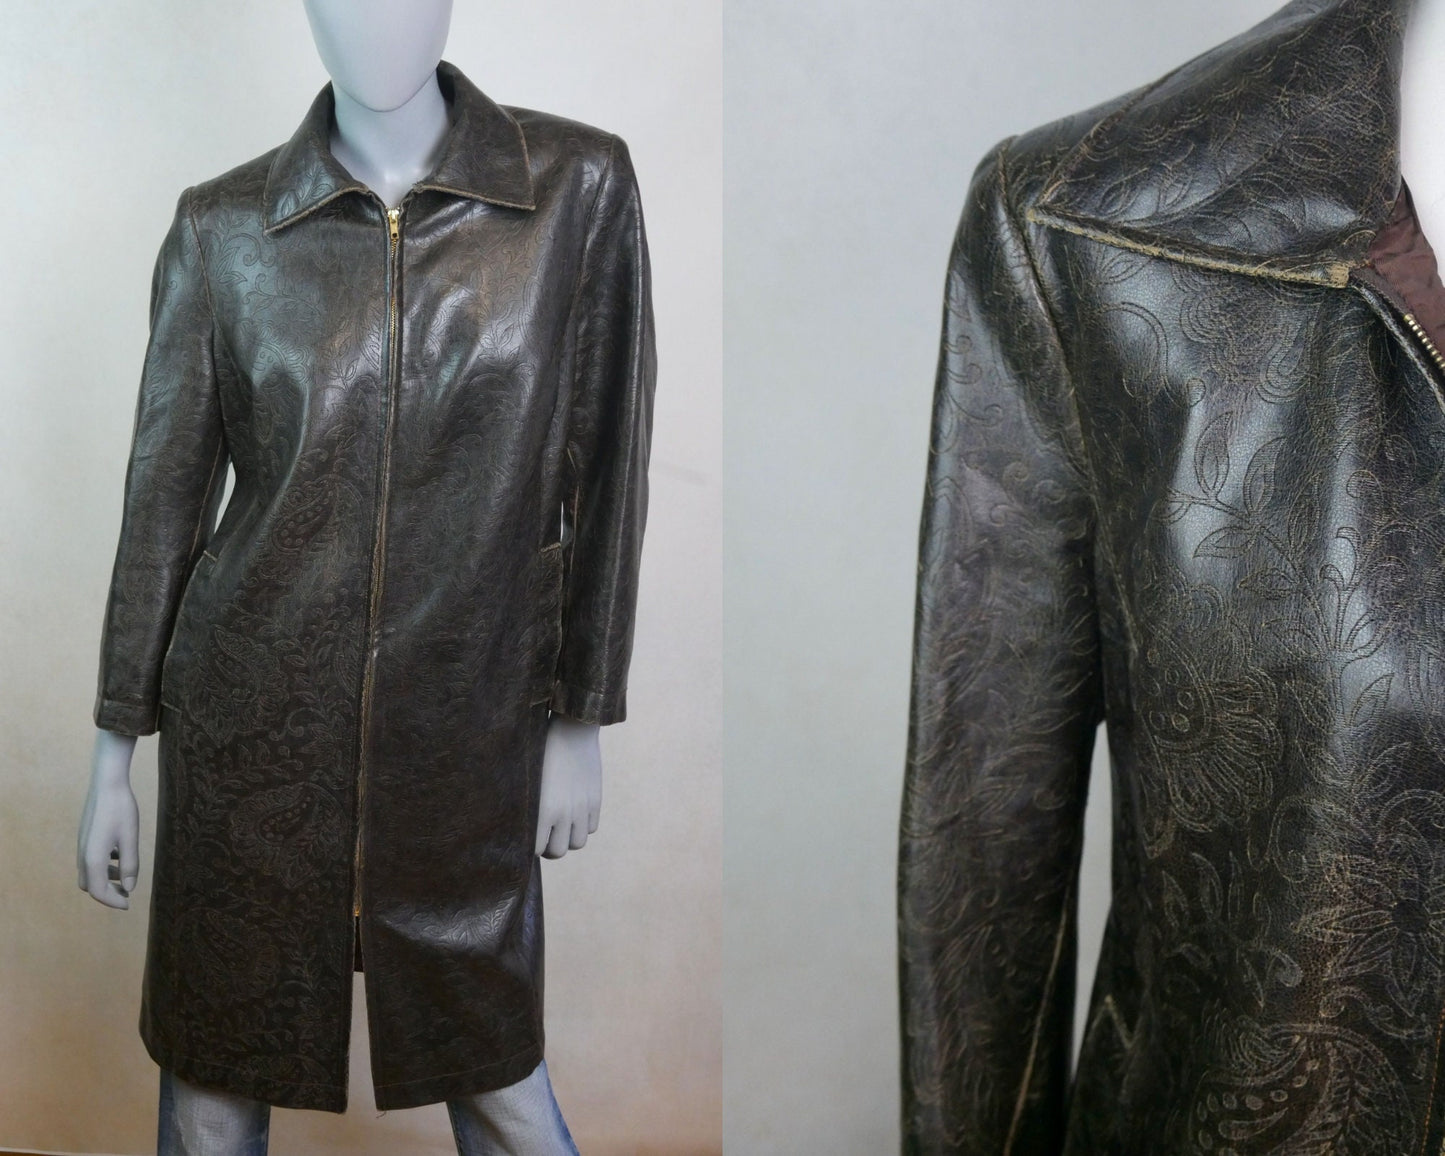 Vintage Brown Leather Coat | Women's 1970s European Vintage Long Jacket with Etched Leaf and Floral Pattern | Large